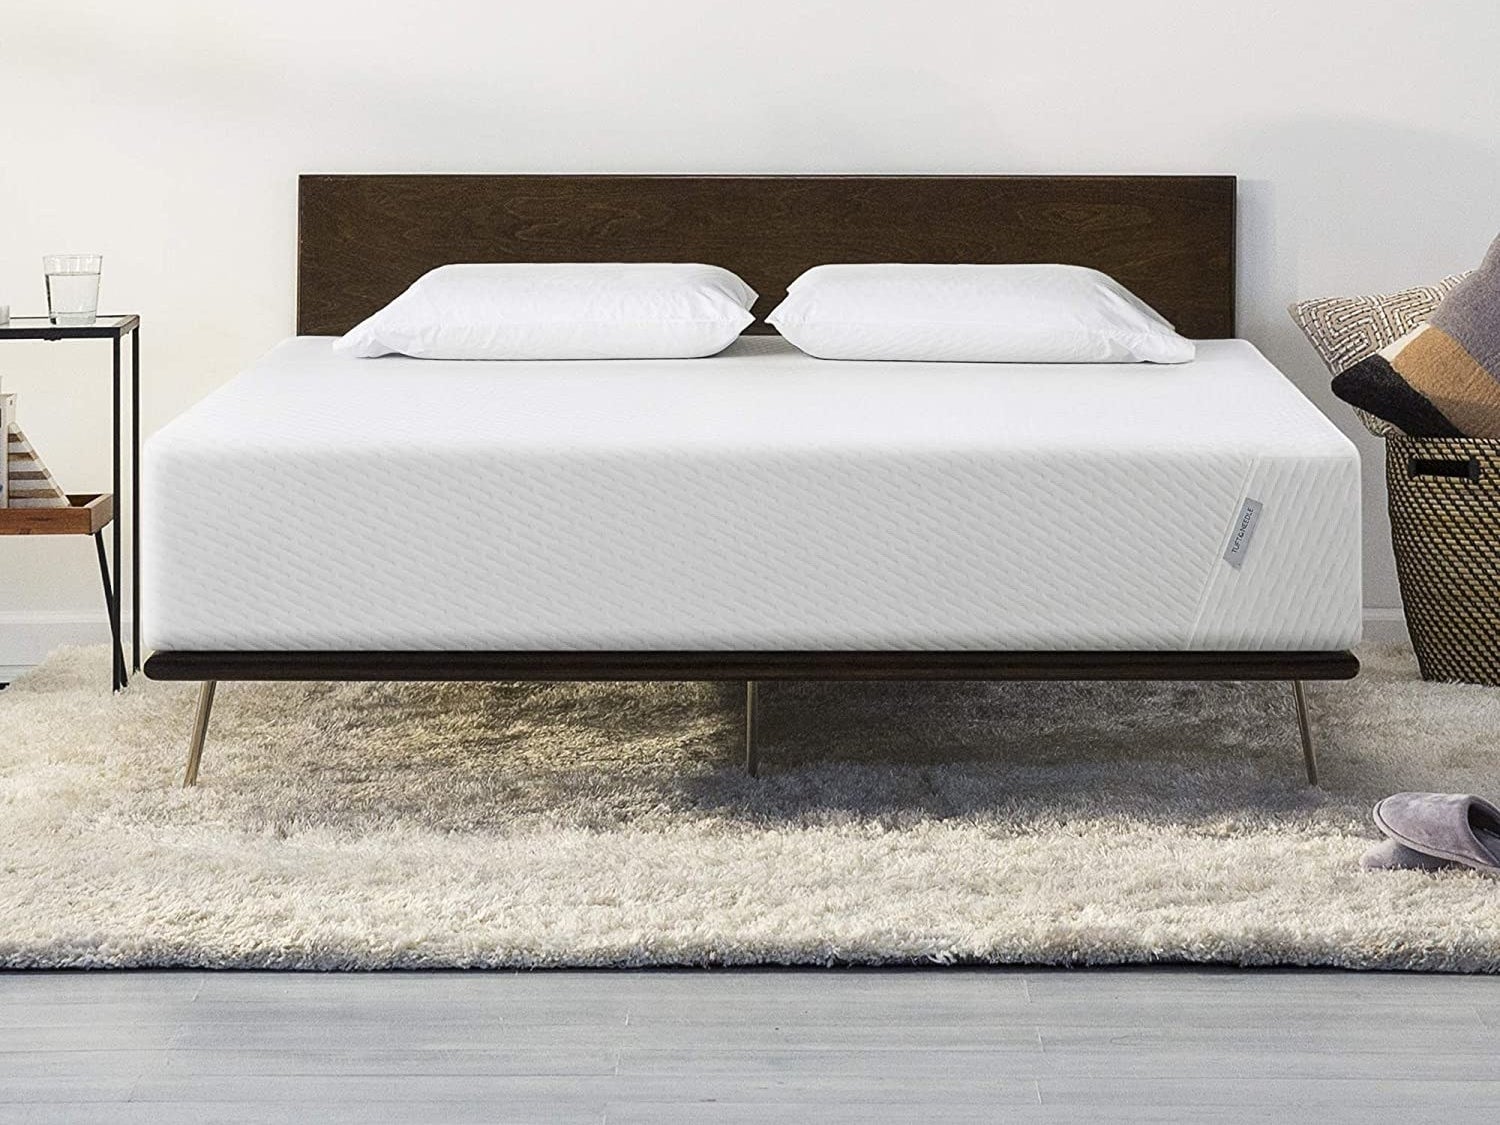 mattress on bed frame